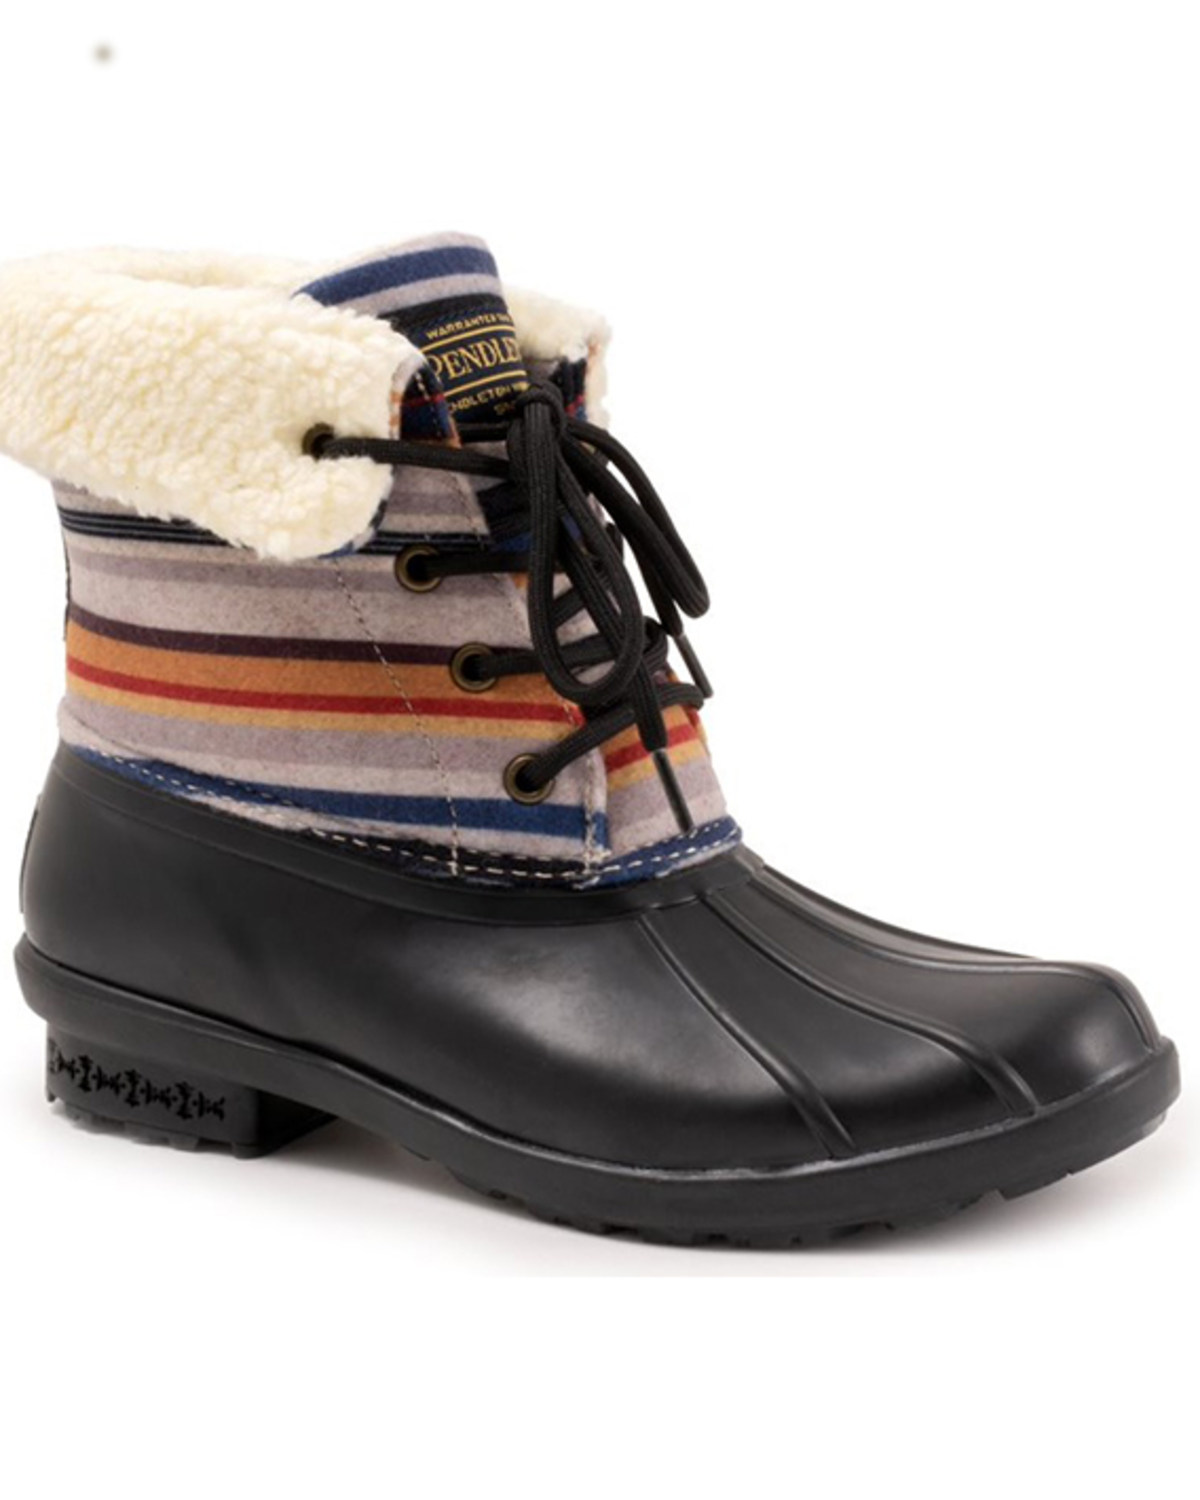 Pendleton Women's Bridger Stripe Duck Rain Boots - Round Toe